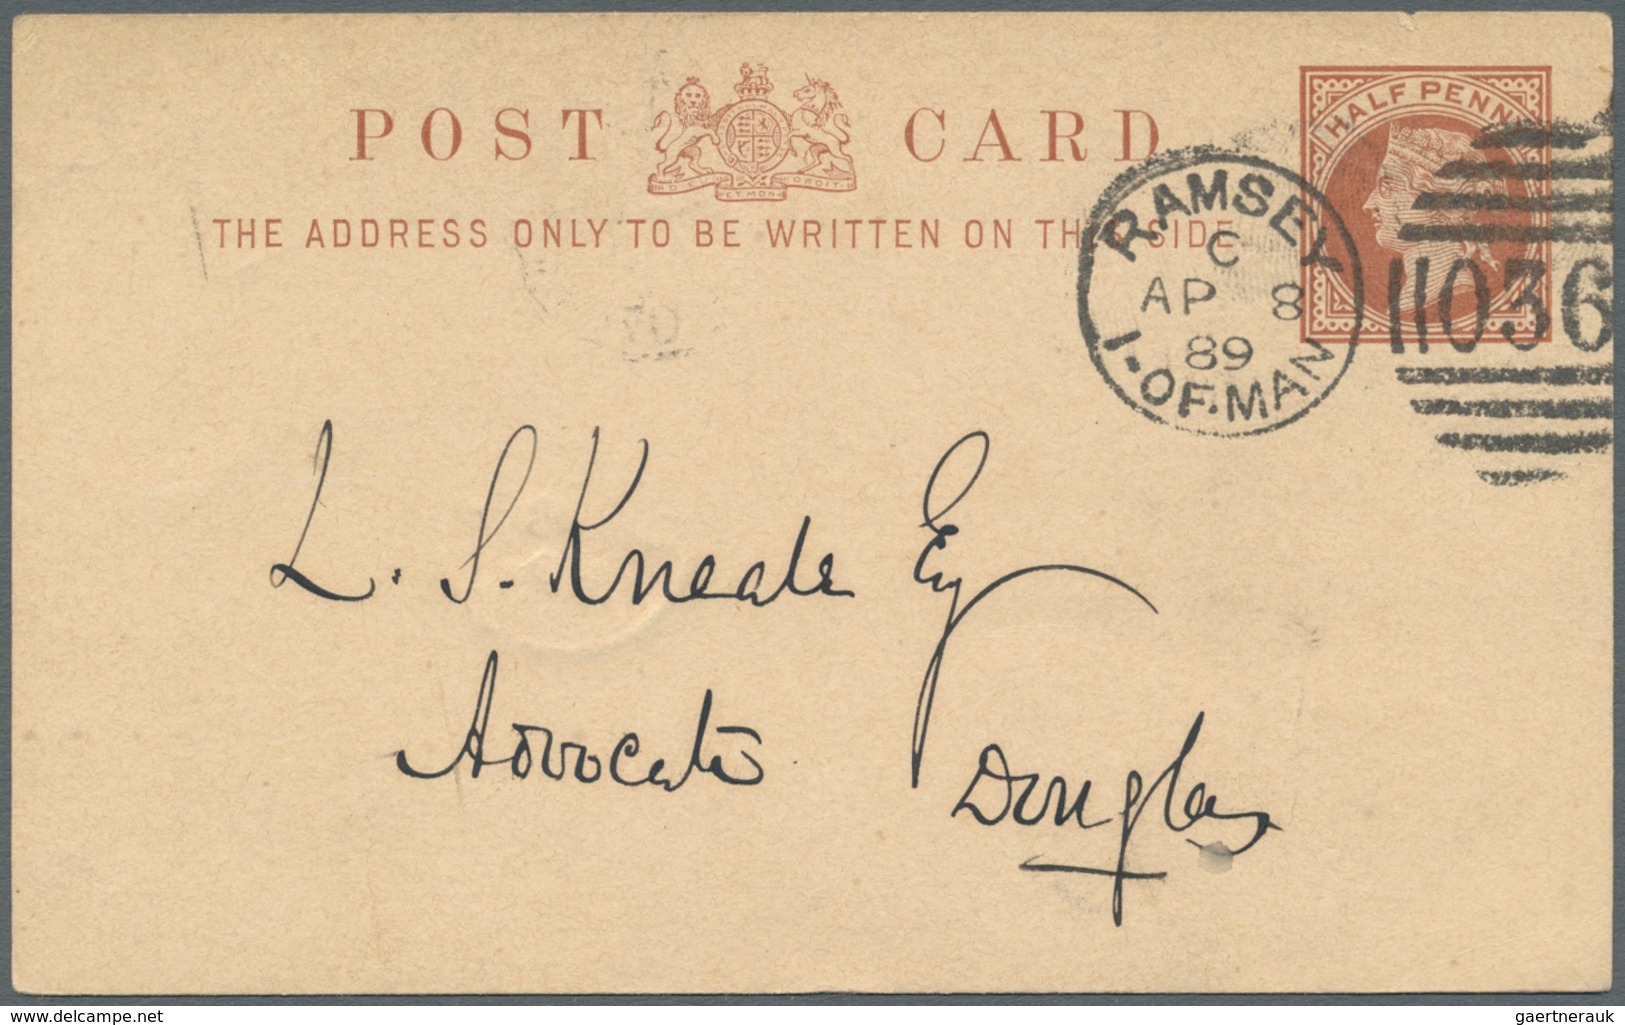 Großbritannien - Isle of Man: 1852/1937: Very fine lot of 39 village postmarks on envelopes, picture